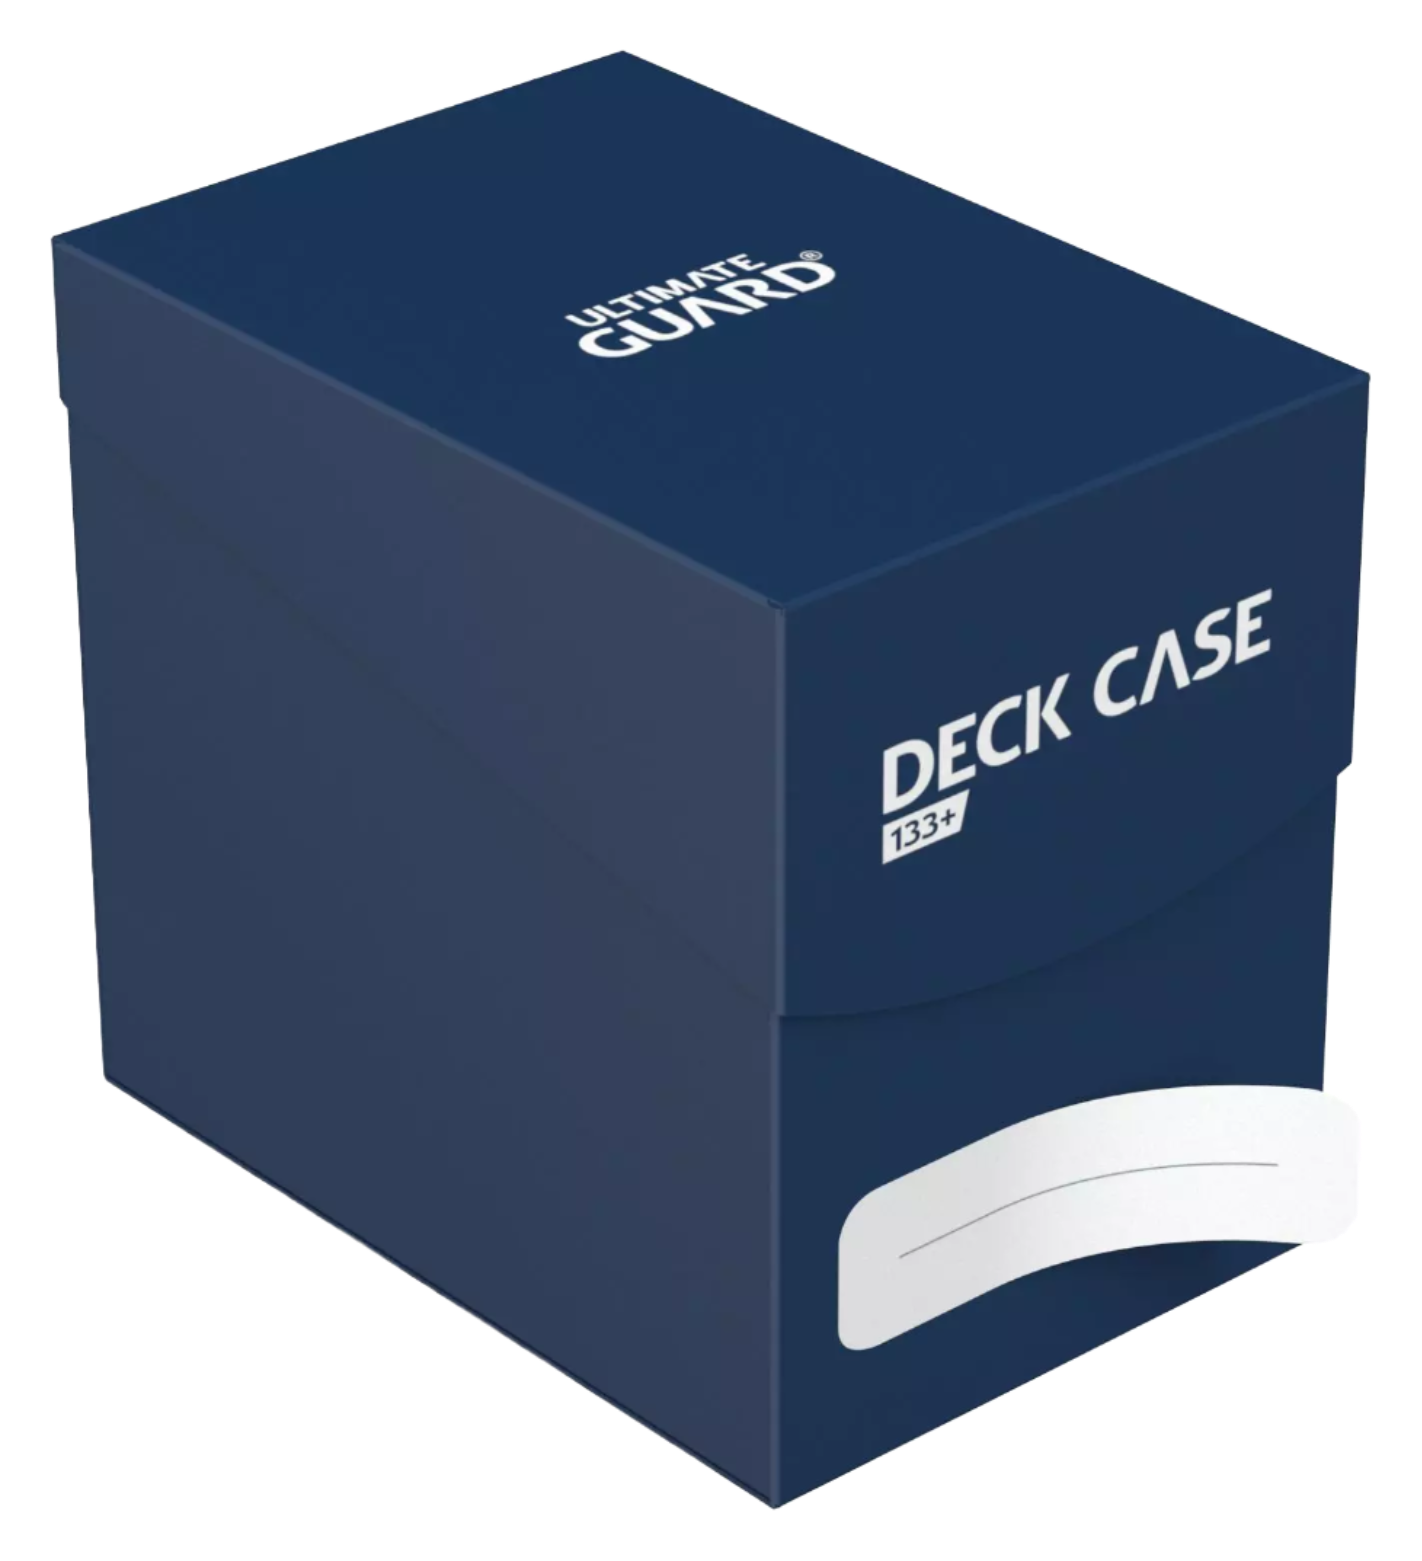 Ultimate Guard - 133+ Deck Case - Dark Blue